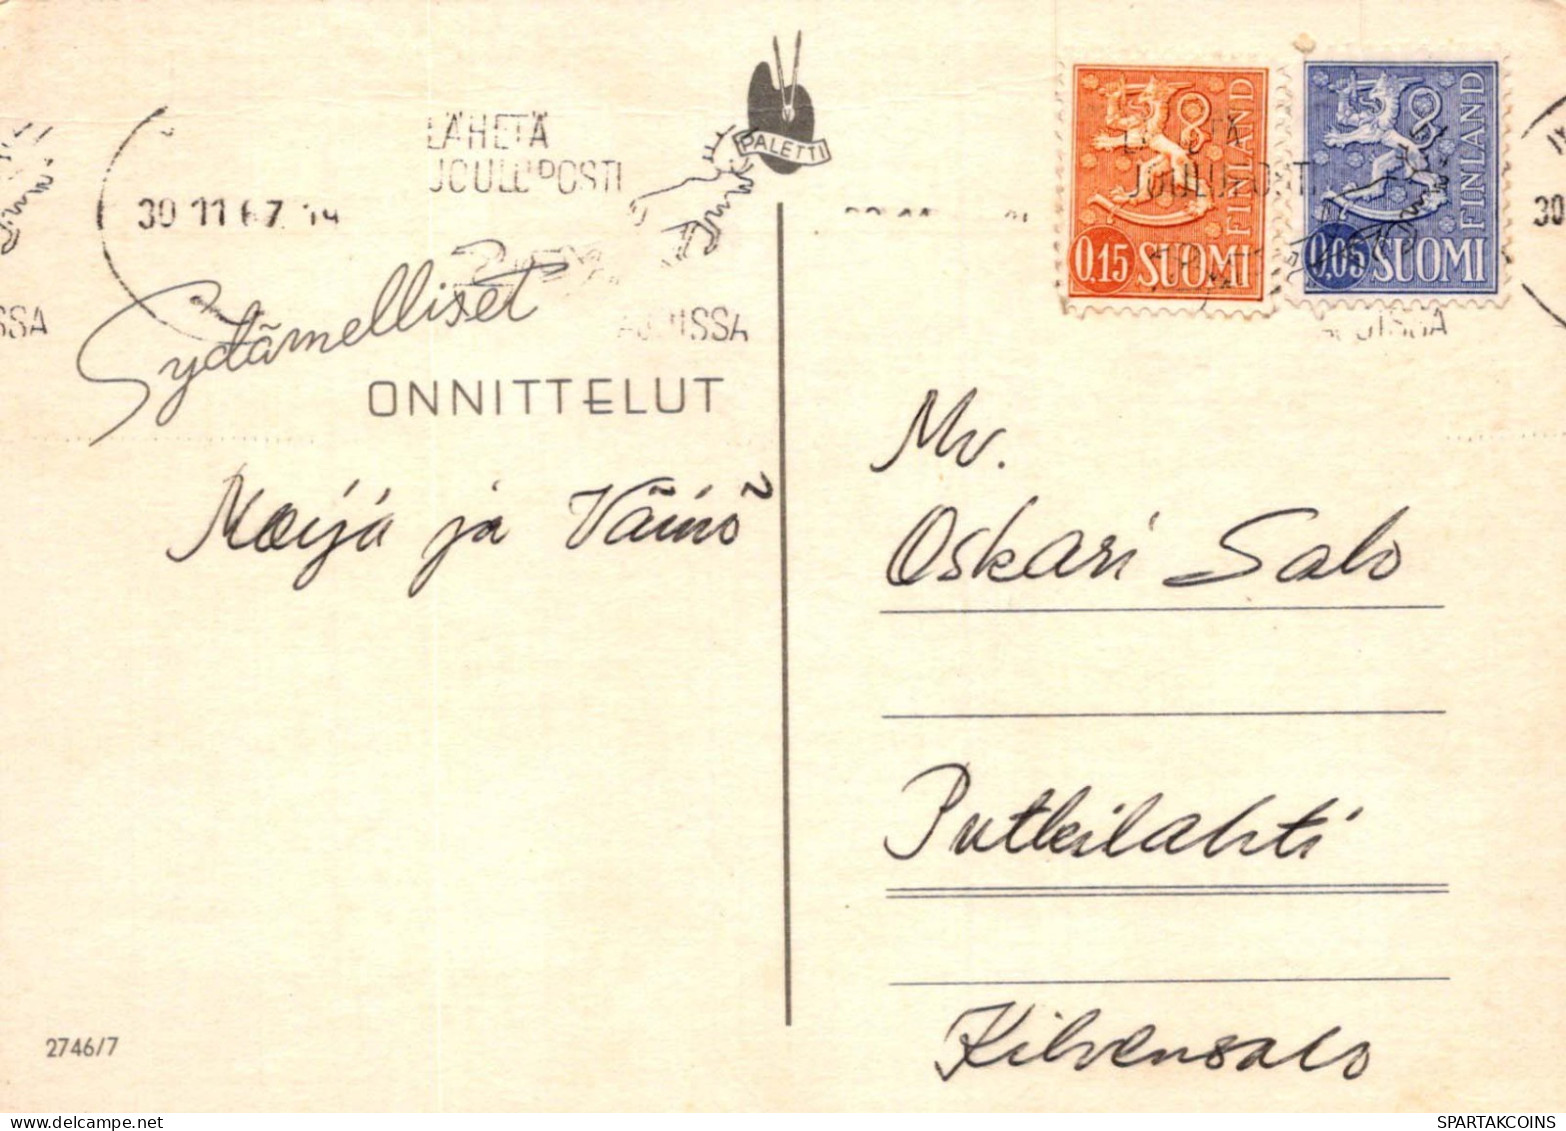 FLORES Vintage Tarjeta Postal CPSM #PBZ380.ES - Blumen